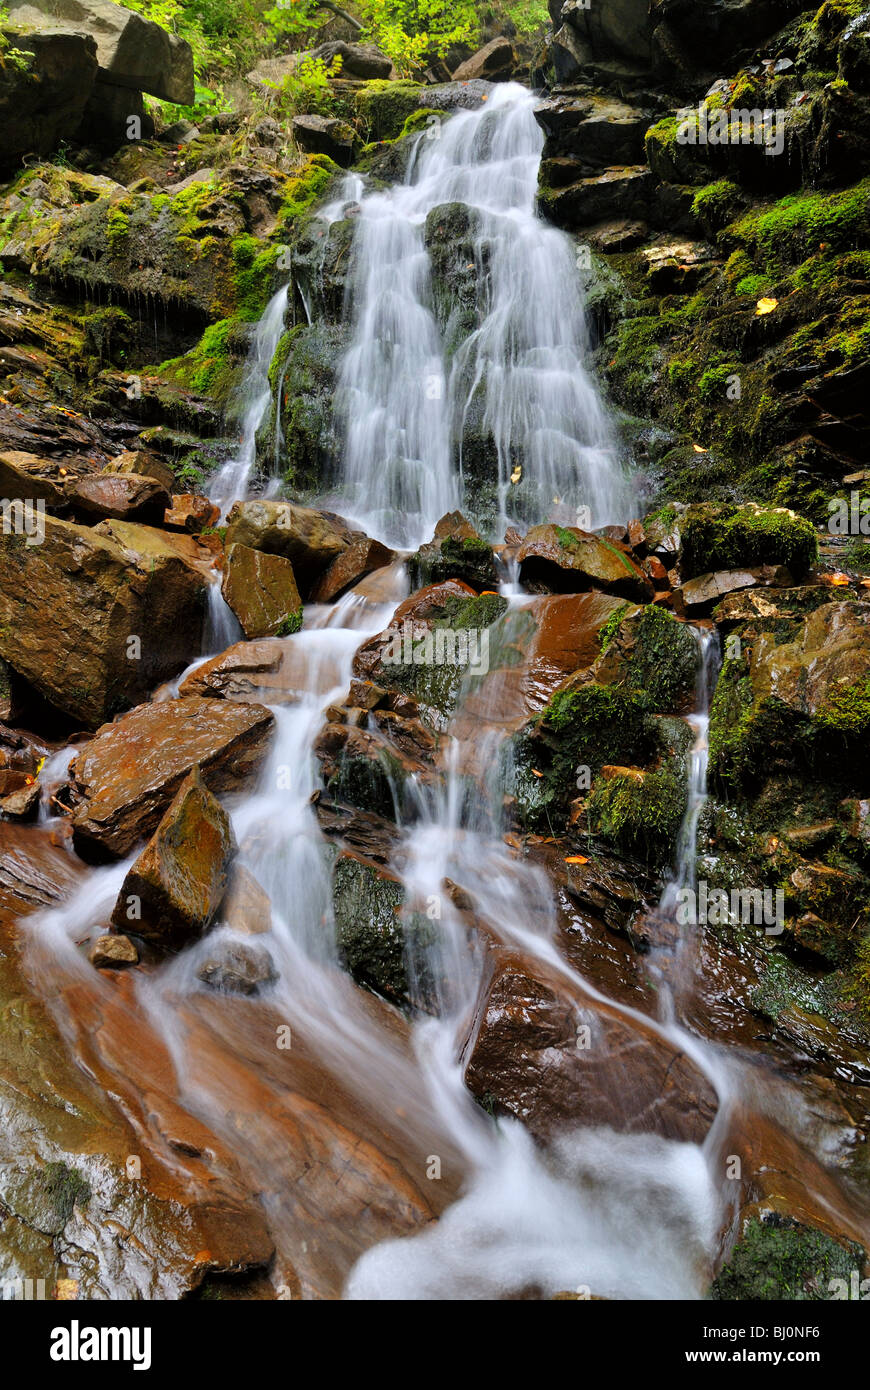 trufanets waterfall in zakarpatie region of ukraine Stock Photo